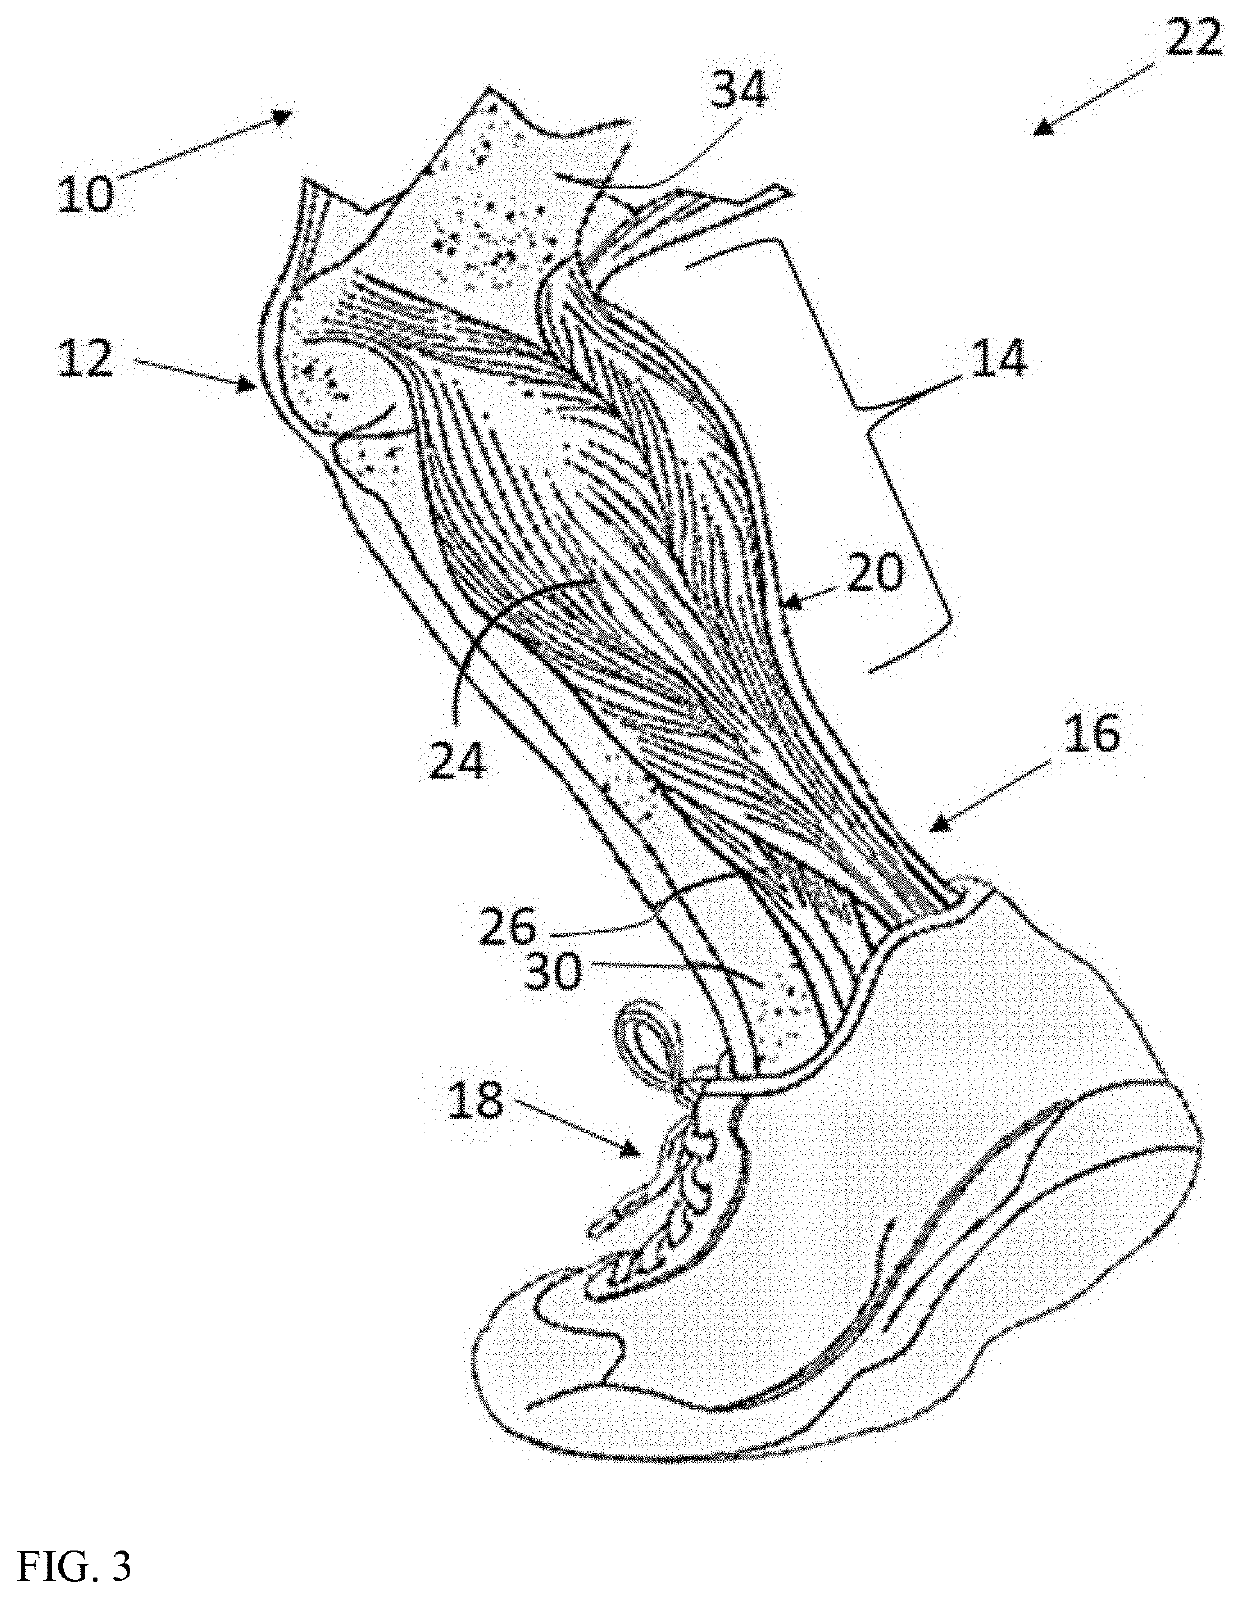 Dorsiflexion/plantarflexion extension above the knee brace